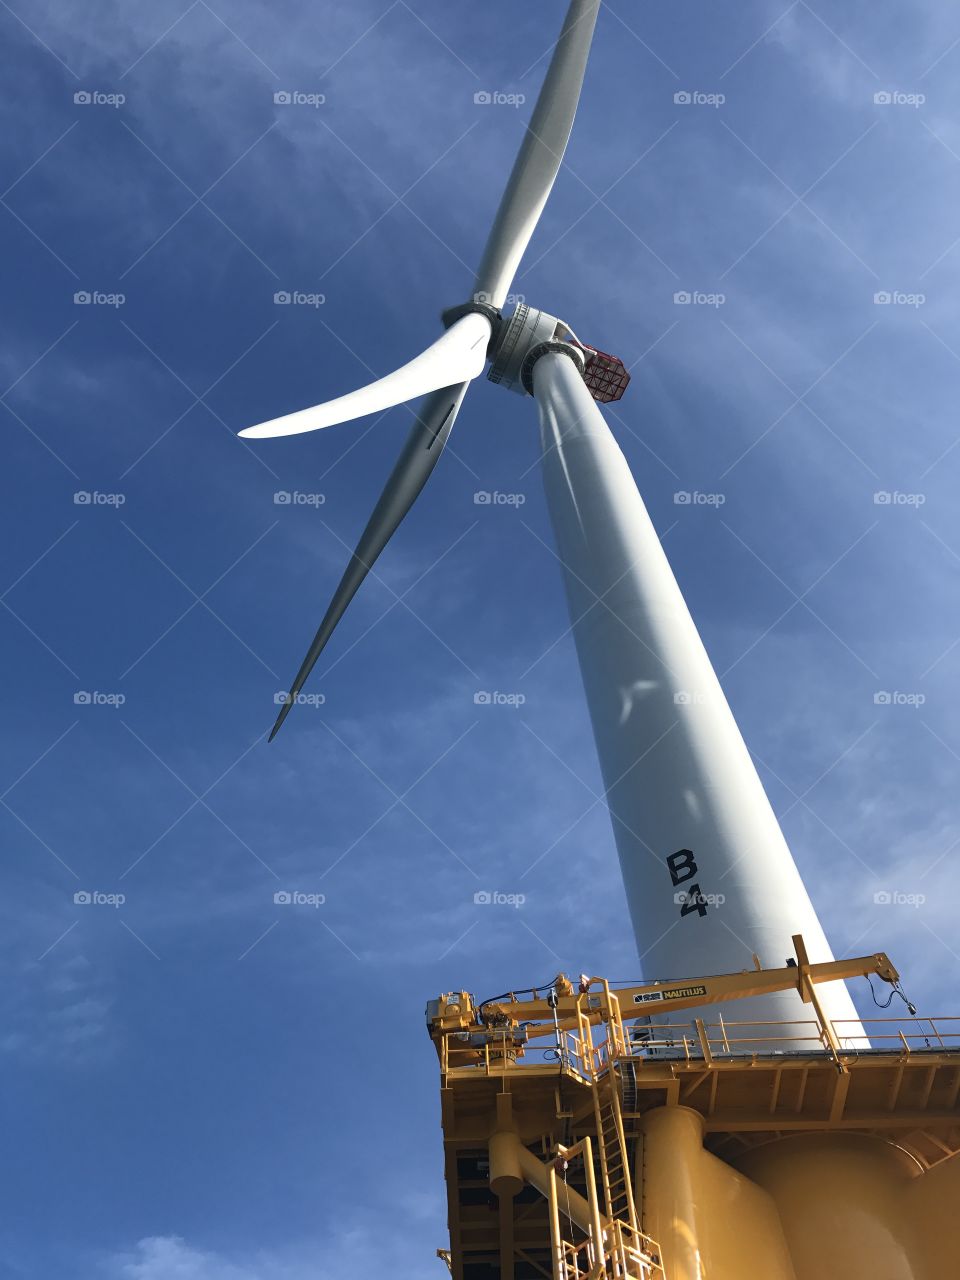 Offshore wind turbine off the coast of Rhode Island. 